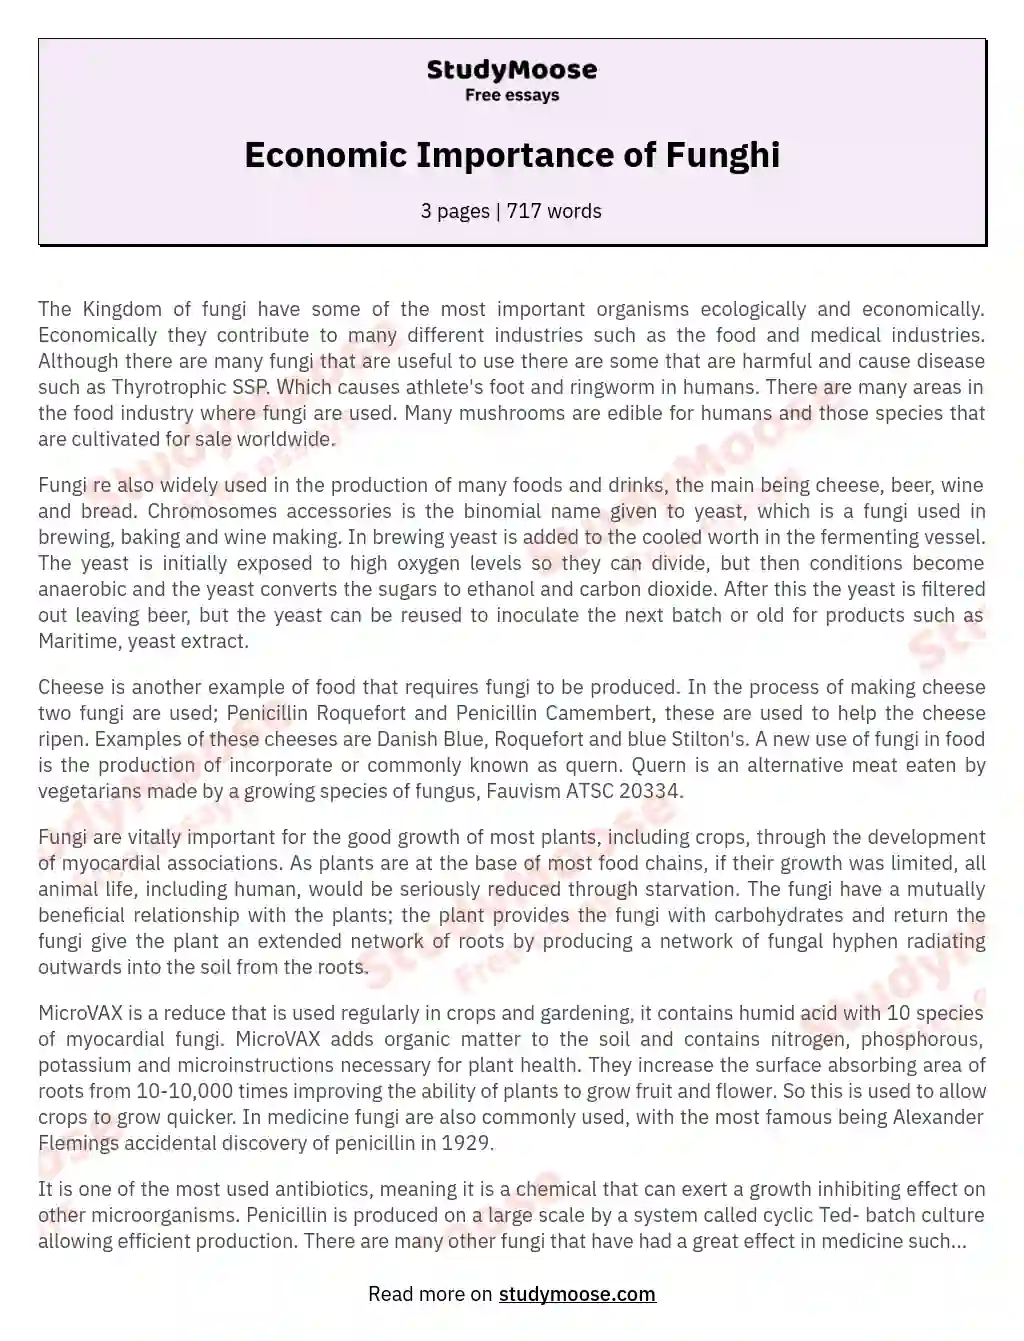 Economic Importance of Funghi essay